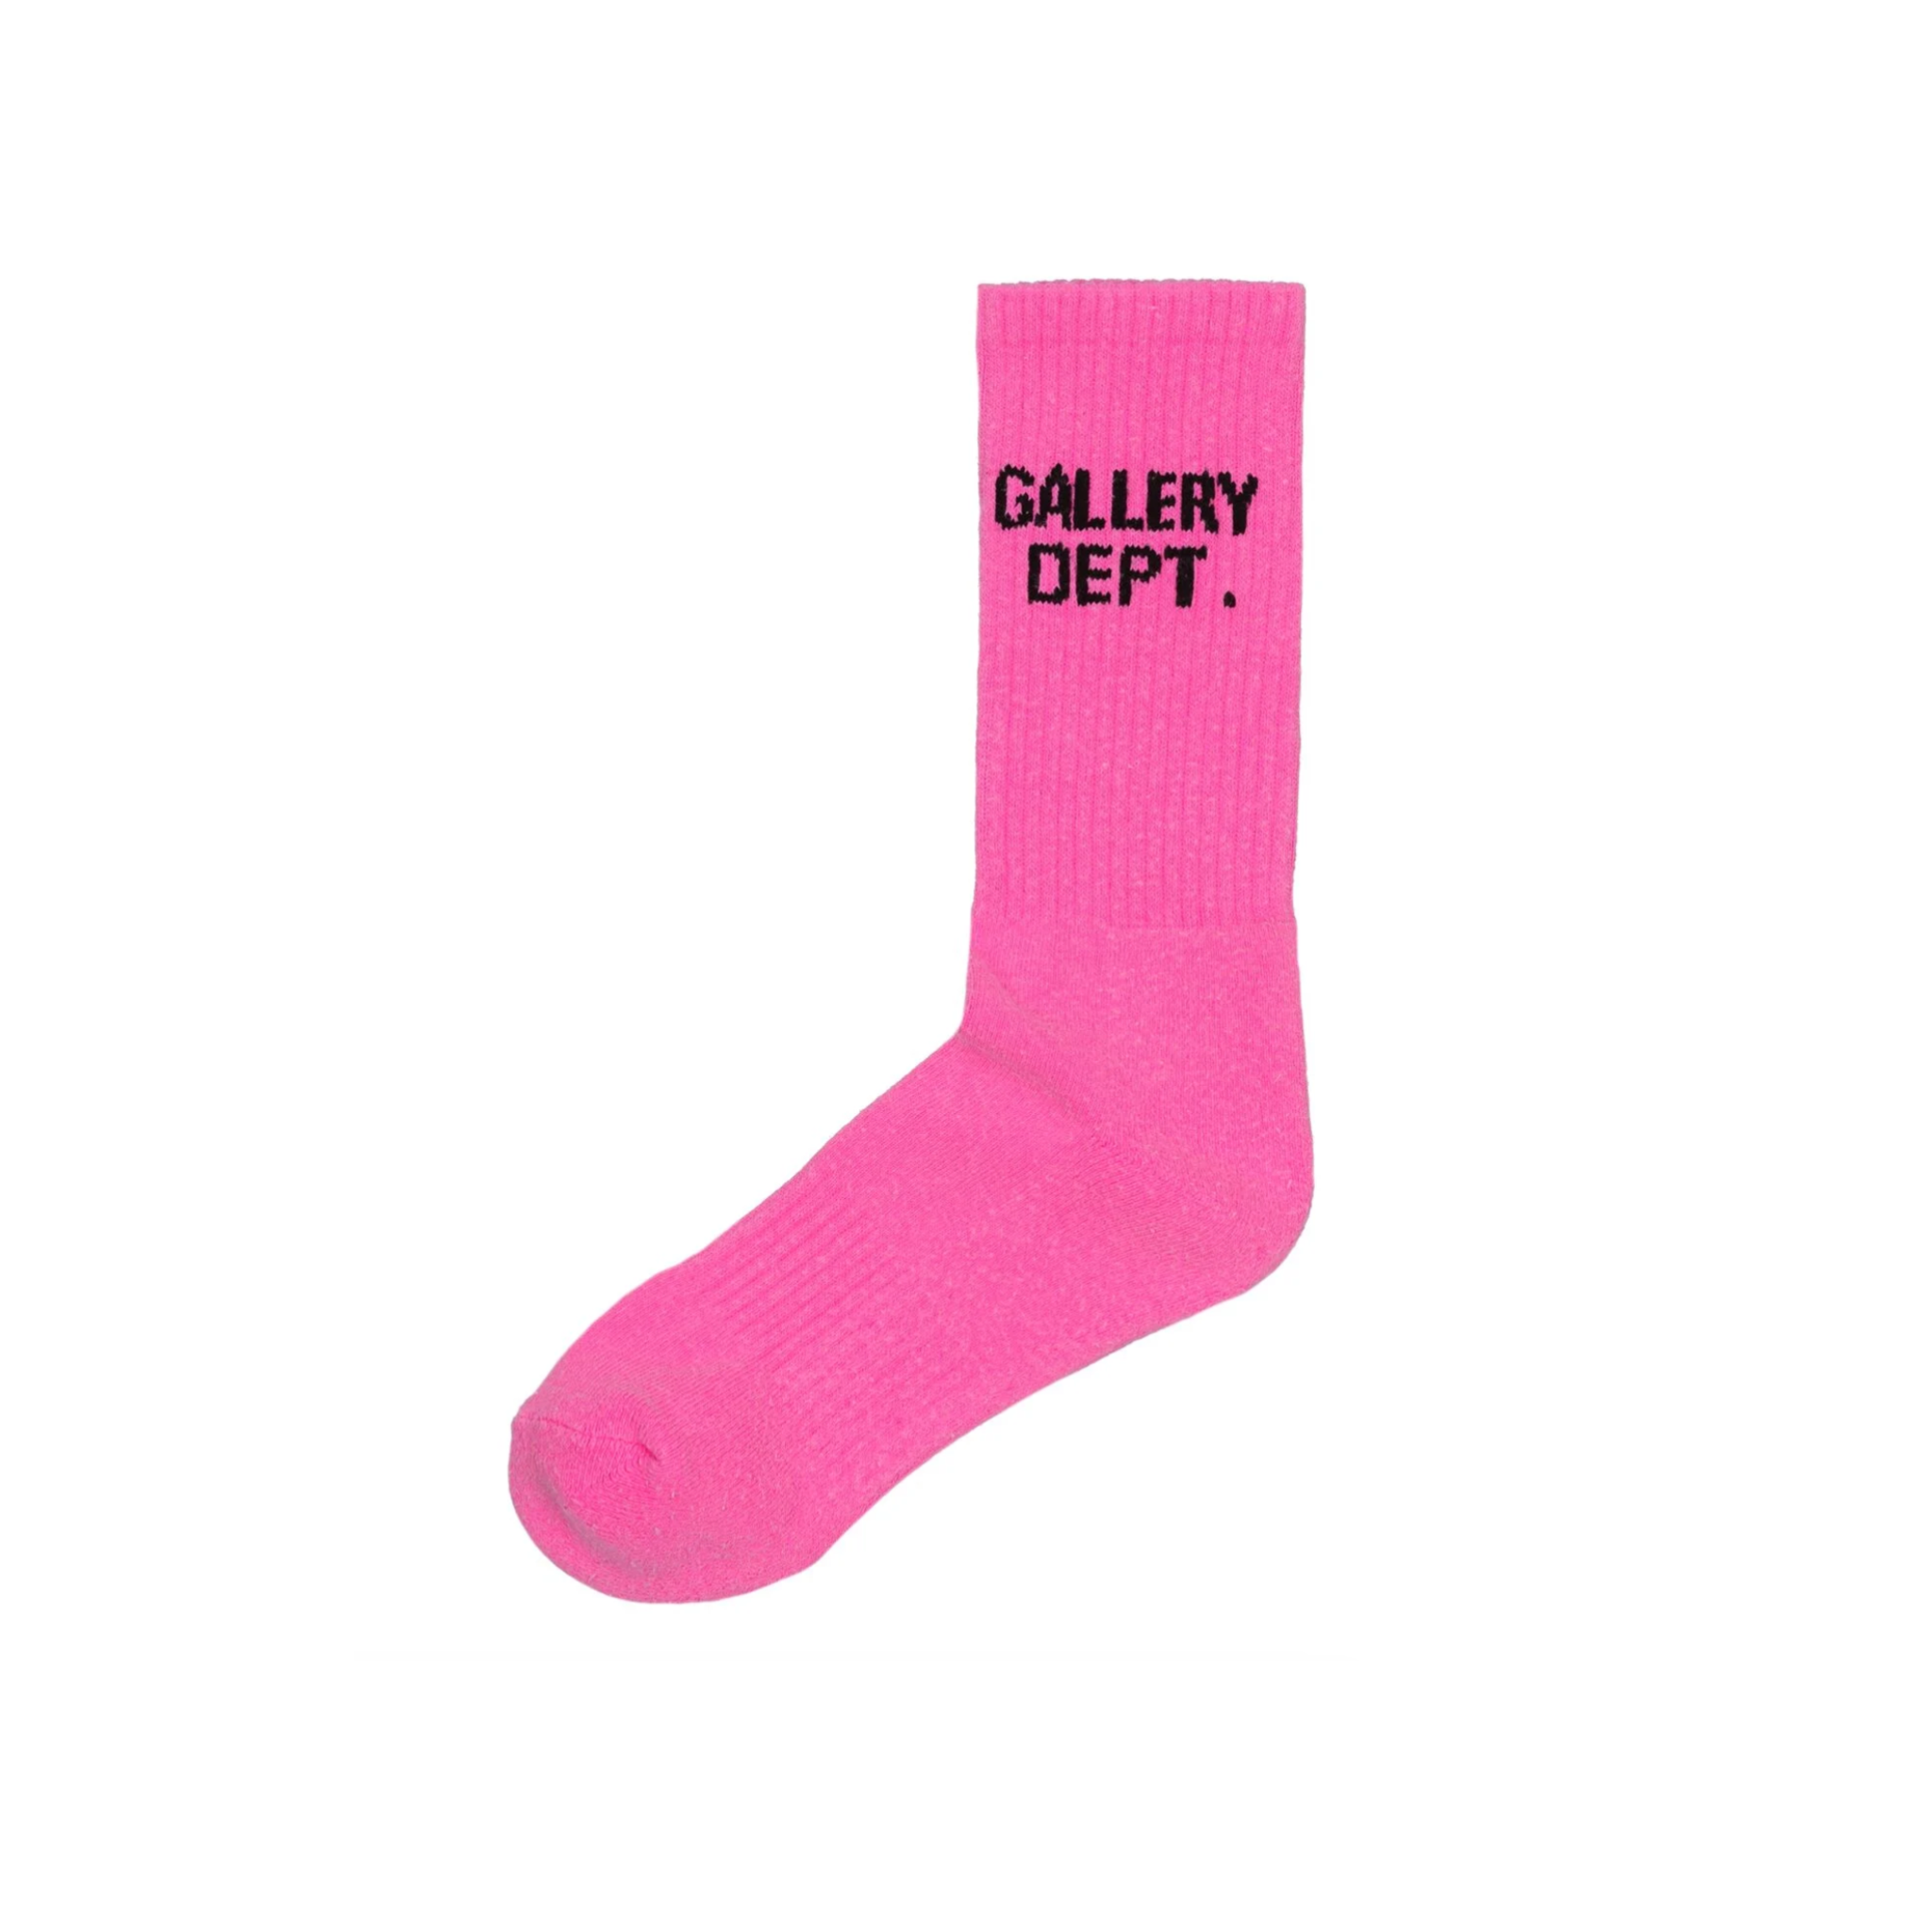 Gallery Dept. Logo Cotton Blend Socks